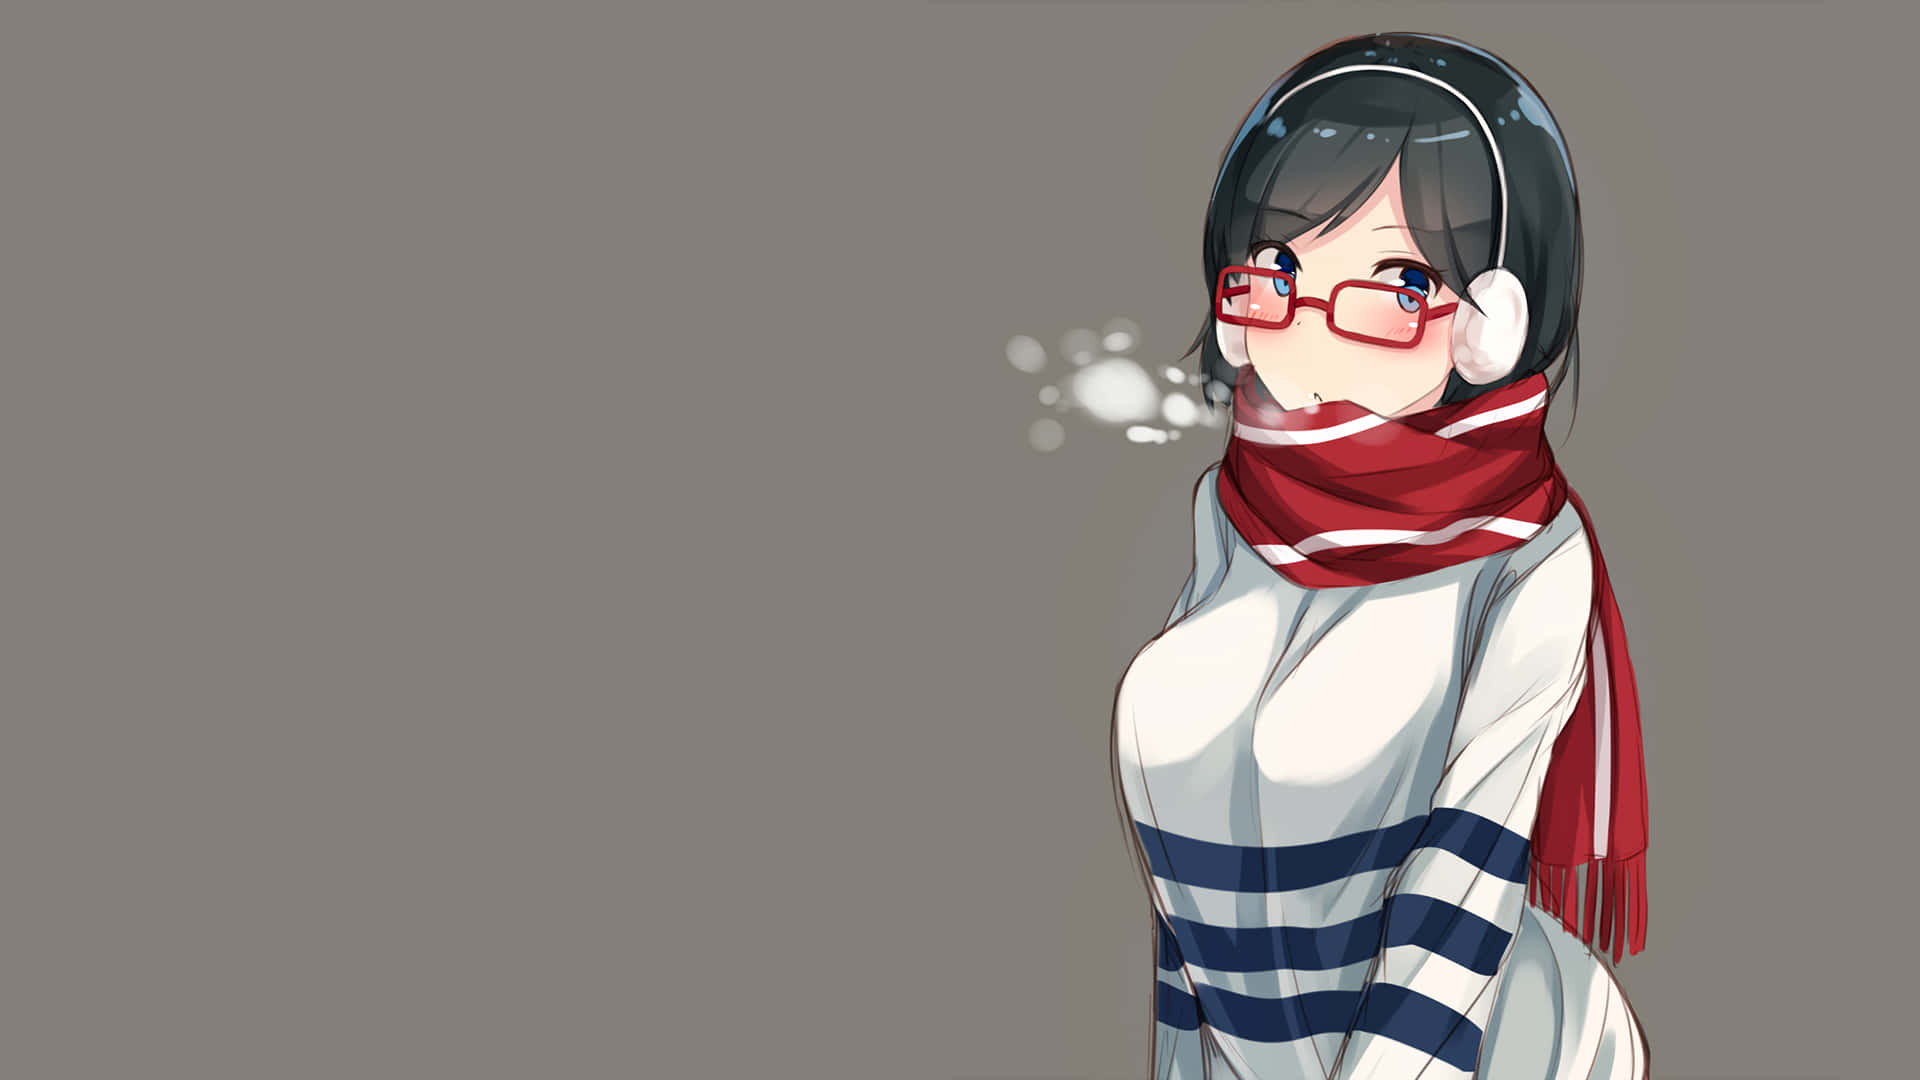 Blushing Anime With Red Eyeglasses Background